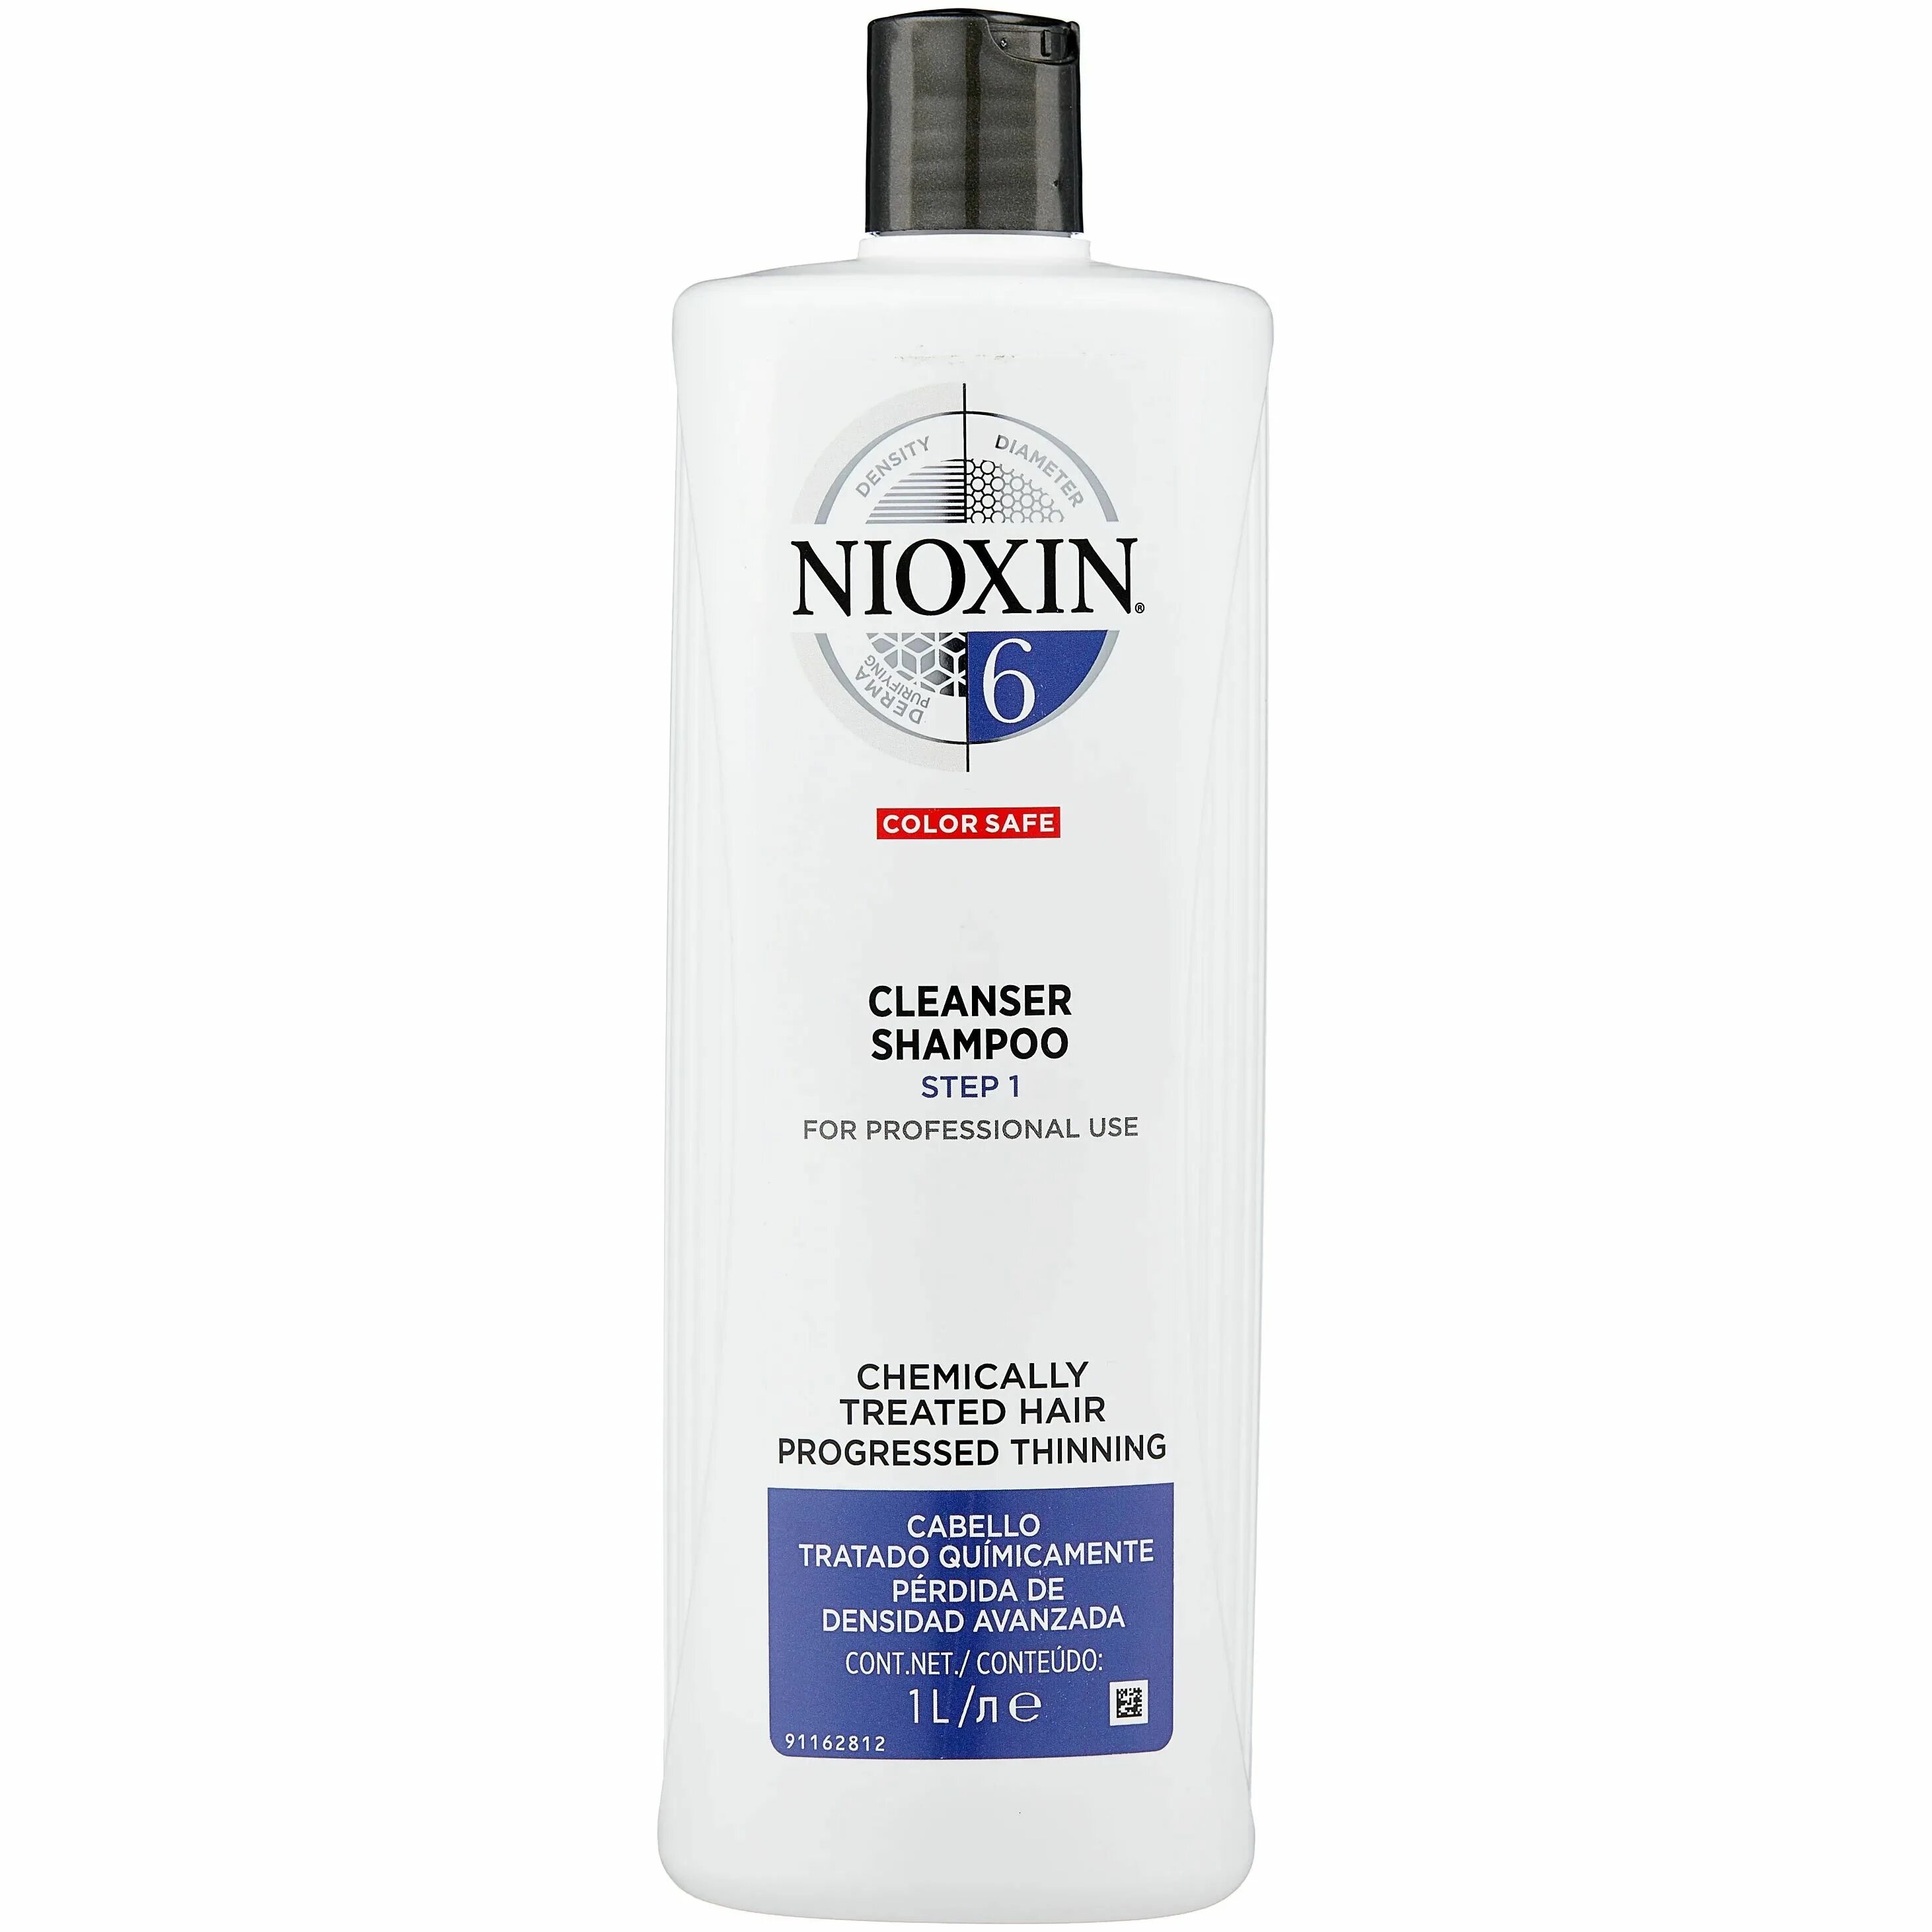 Nioxin Cleanser очищающий шампунь (система 3) System 3, 300 мл. Ниоксин шампунь 1000 мл. Nioxin очищающий шампунь (система 1) 1000мл. Nioxin шампунь System 6 Cleanser Step 1, 300 мл. System shampoo